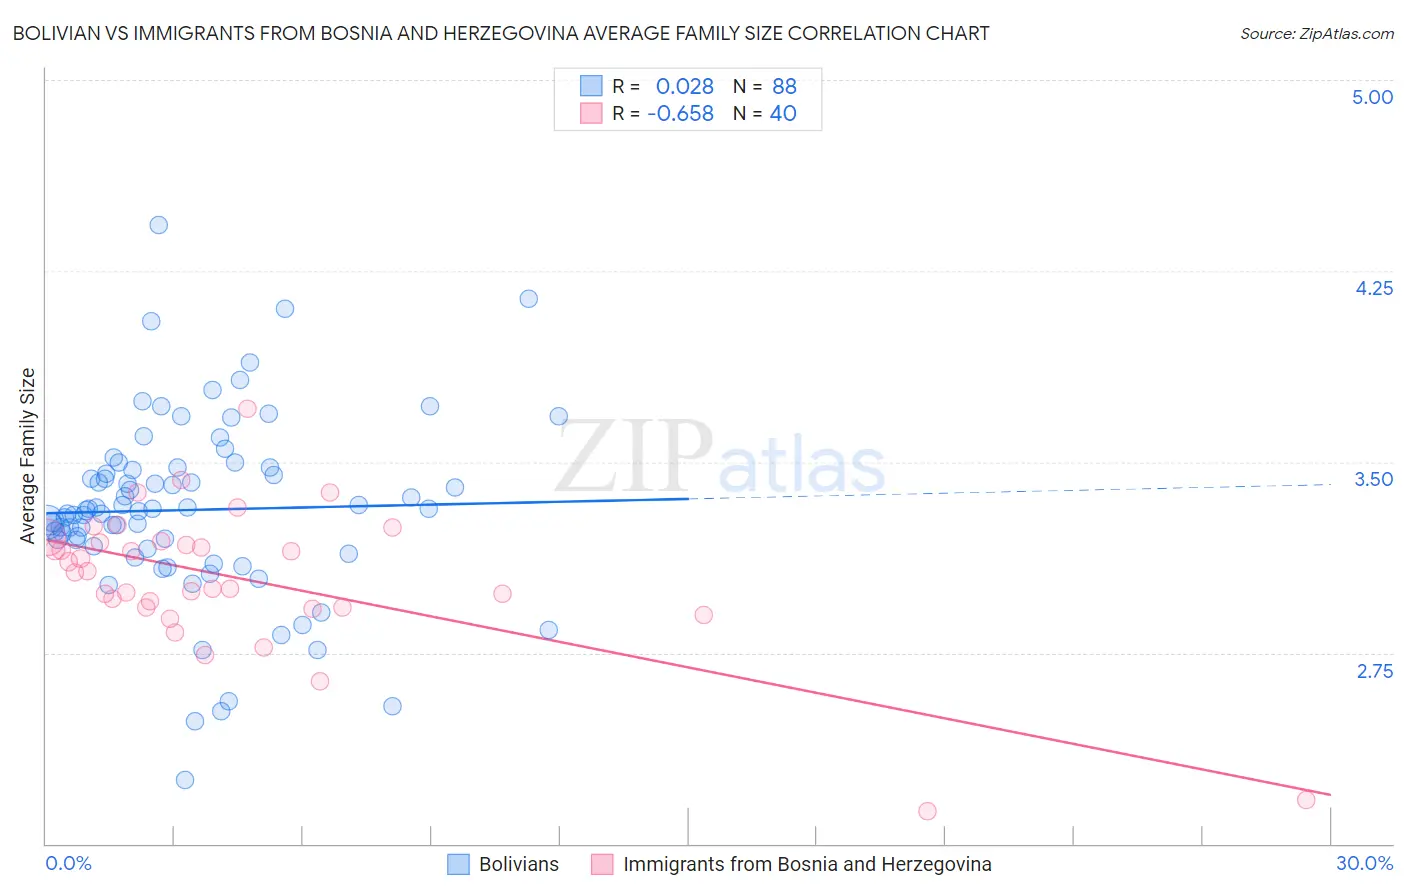 Bolivian vs Immigrants from Bosnia and Herzegovina Average Family Size